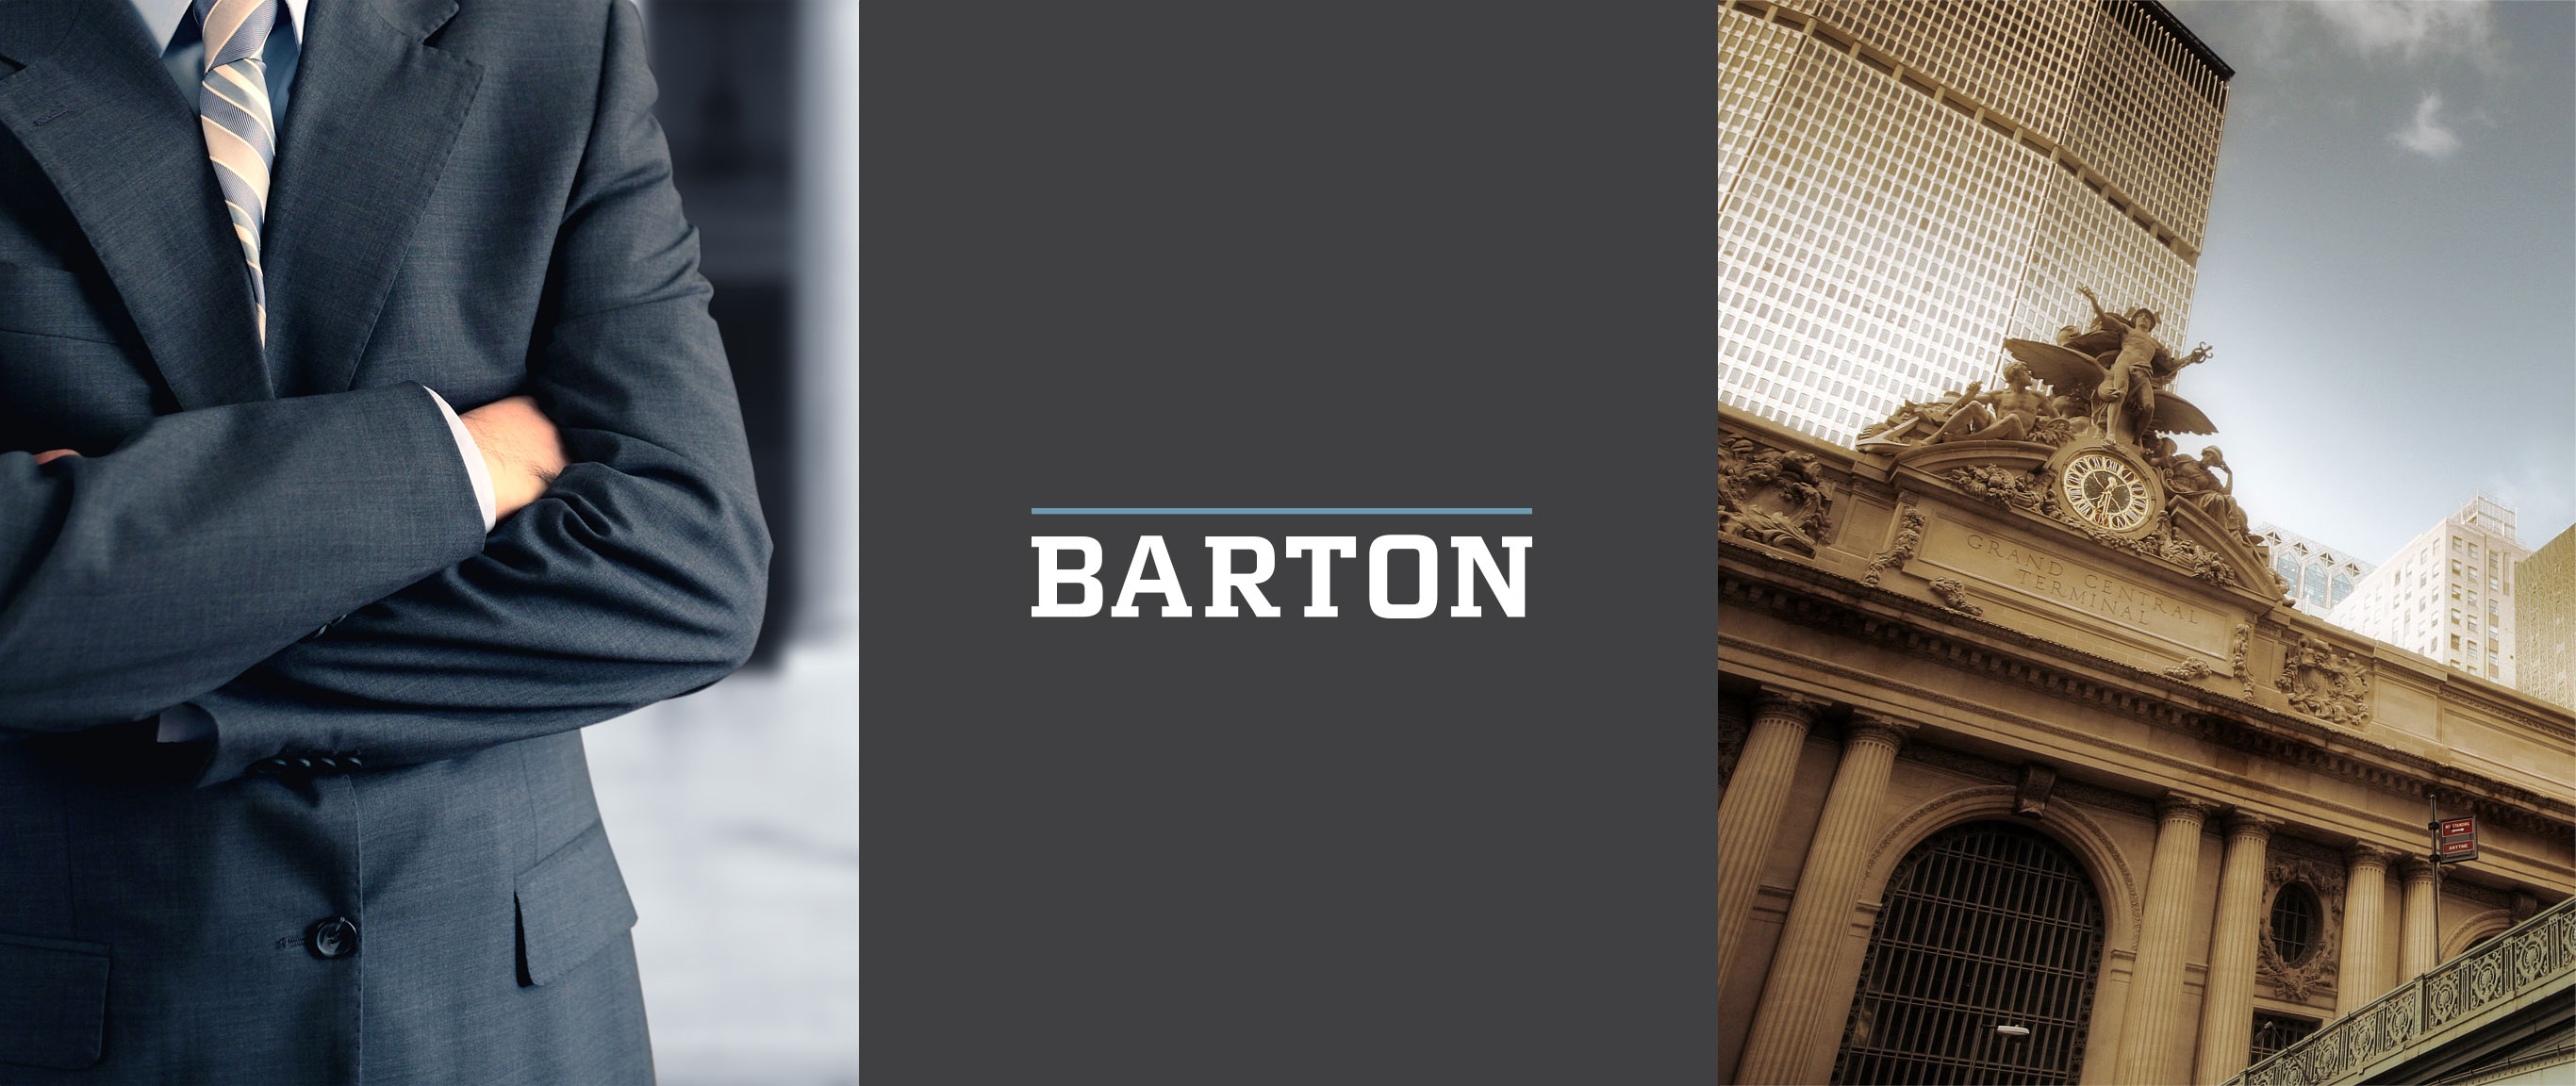 Barton-3image